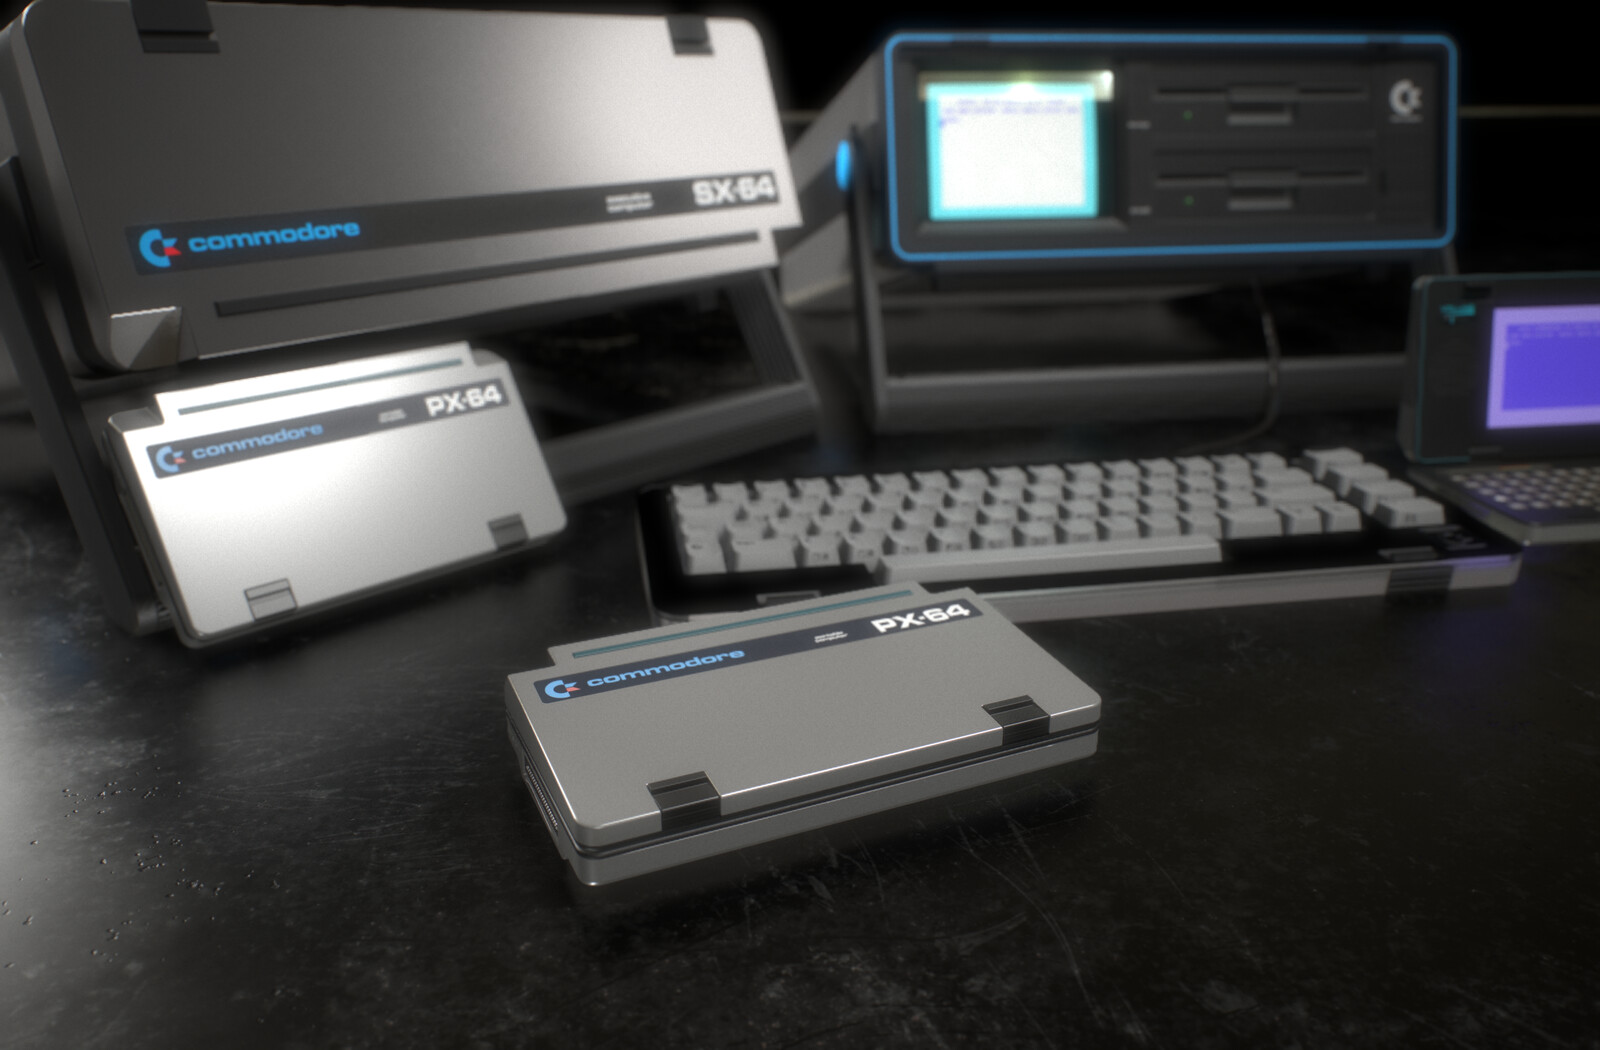 Commodore PX-64 Correlation Shots